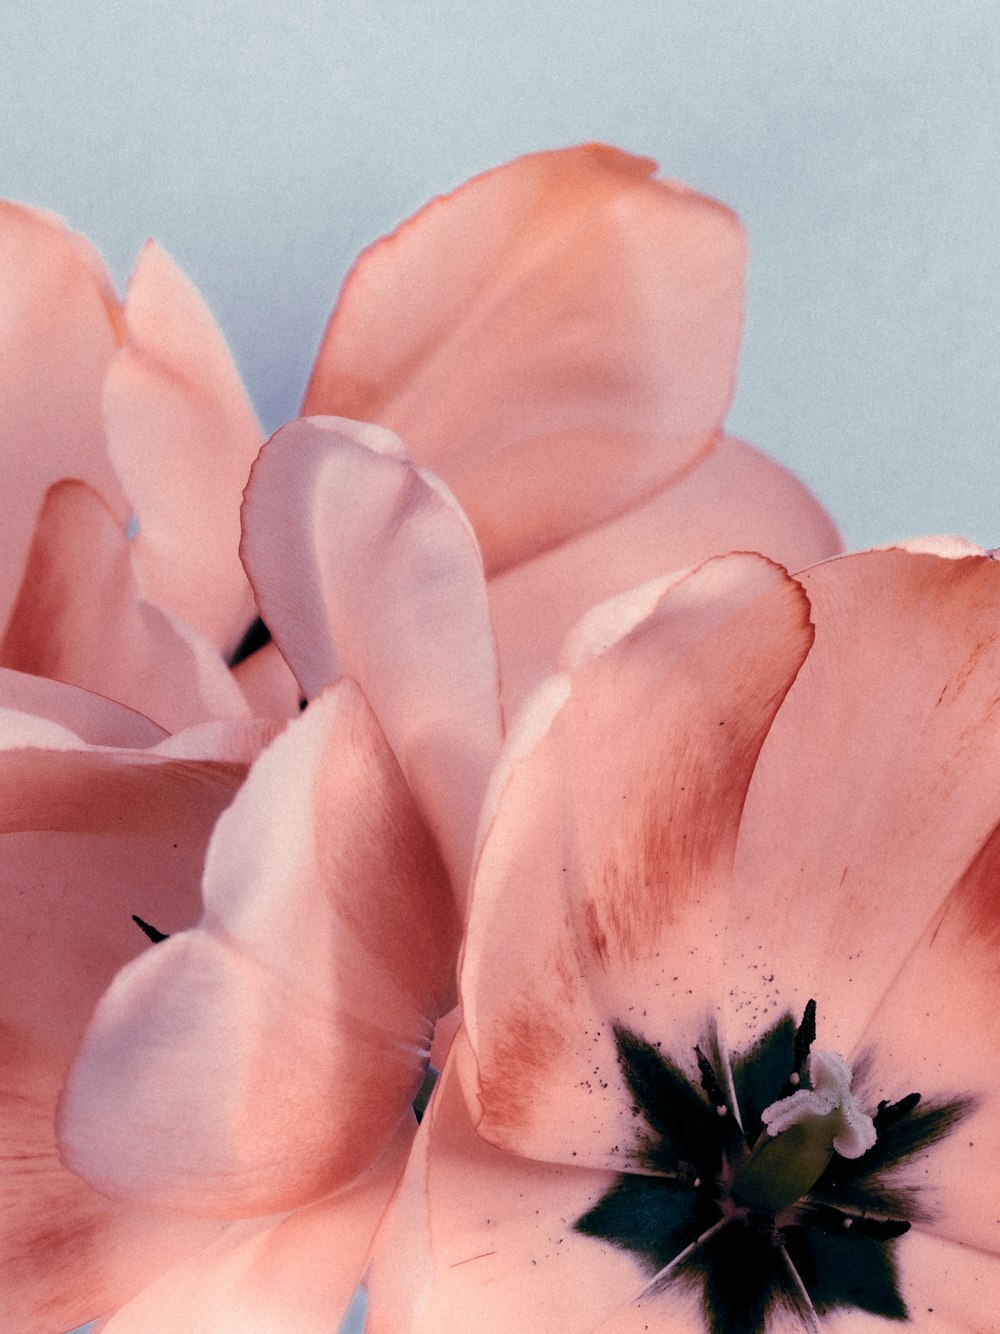 tulipán rosa en flor foto de primer plano